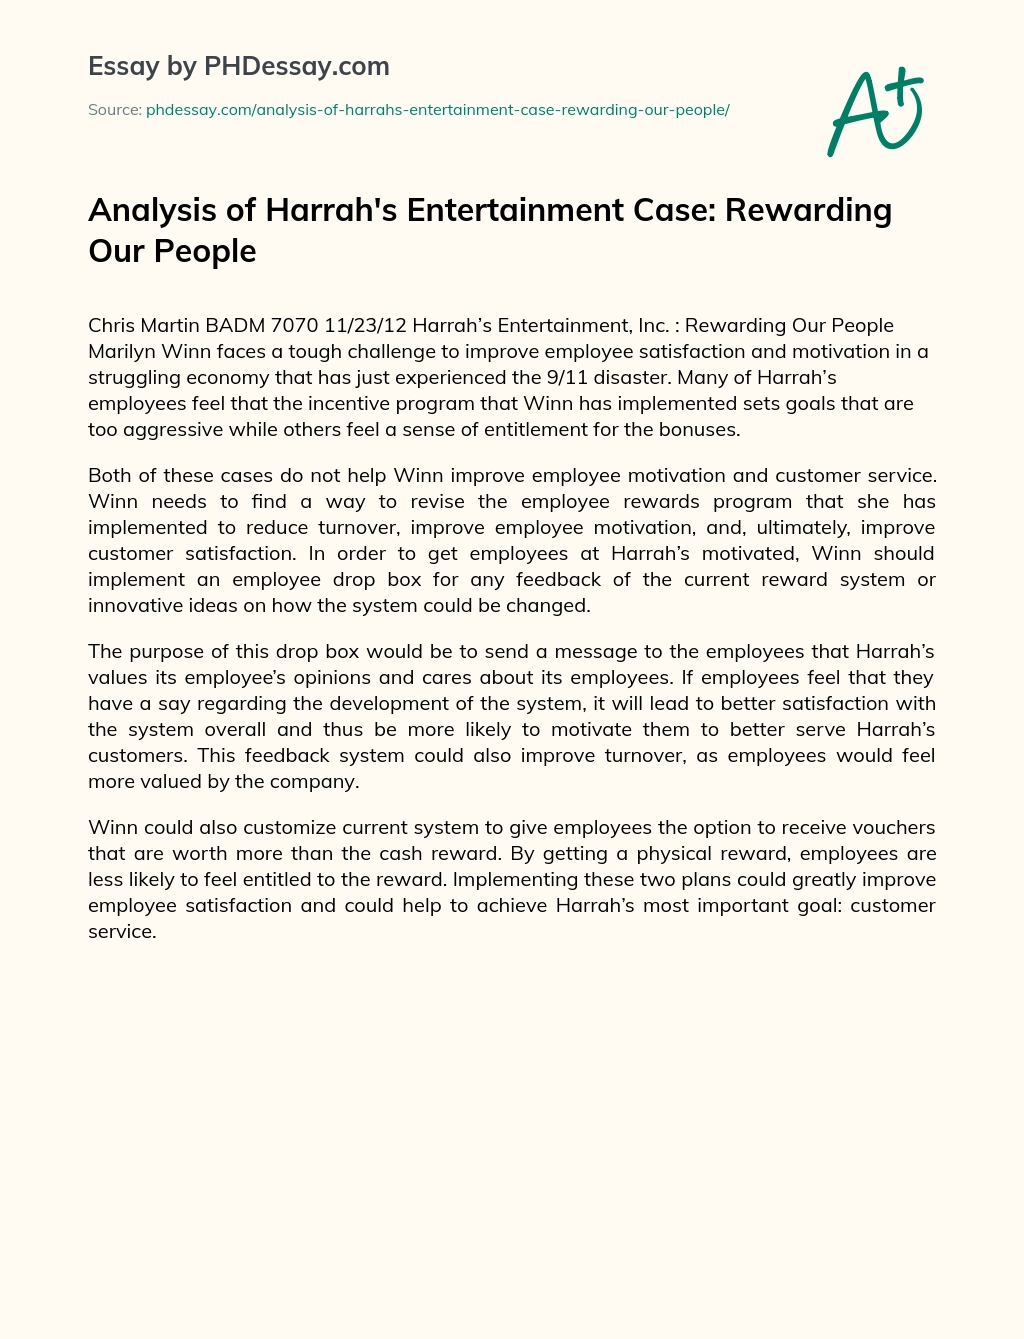 Analysis of Harrah’s Entertainment Case: Rewarding Our People essay